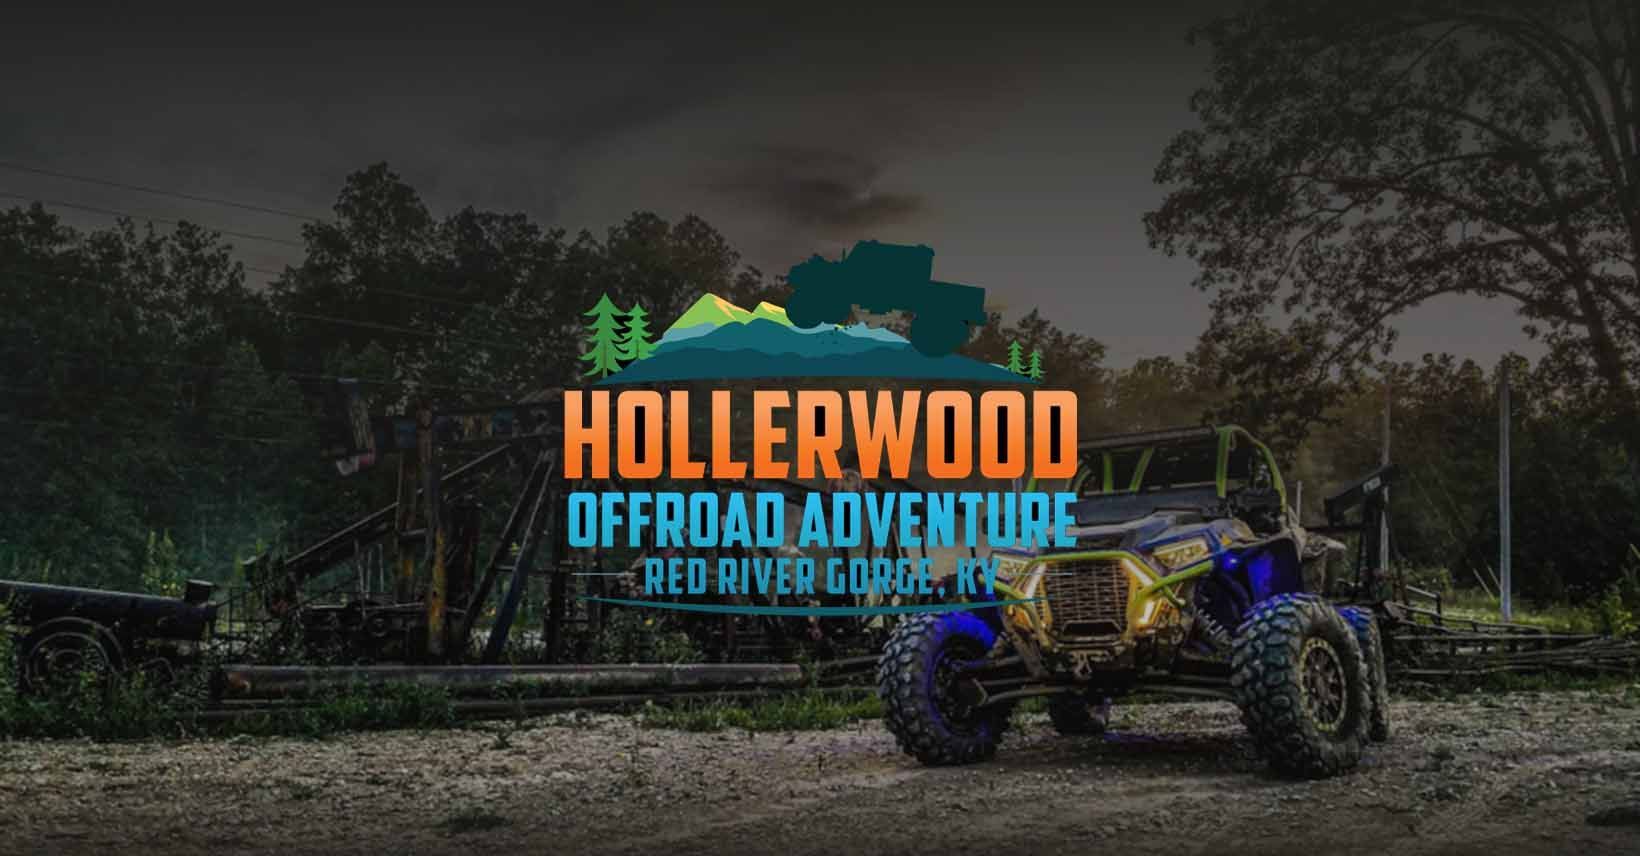 Hollerwood Offroad Adventure Park